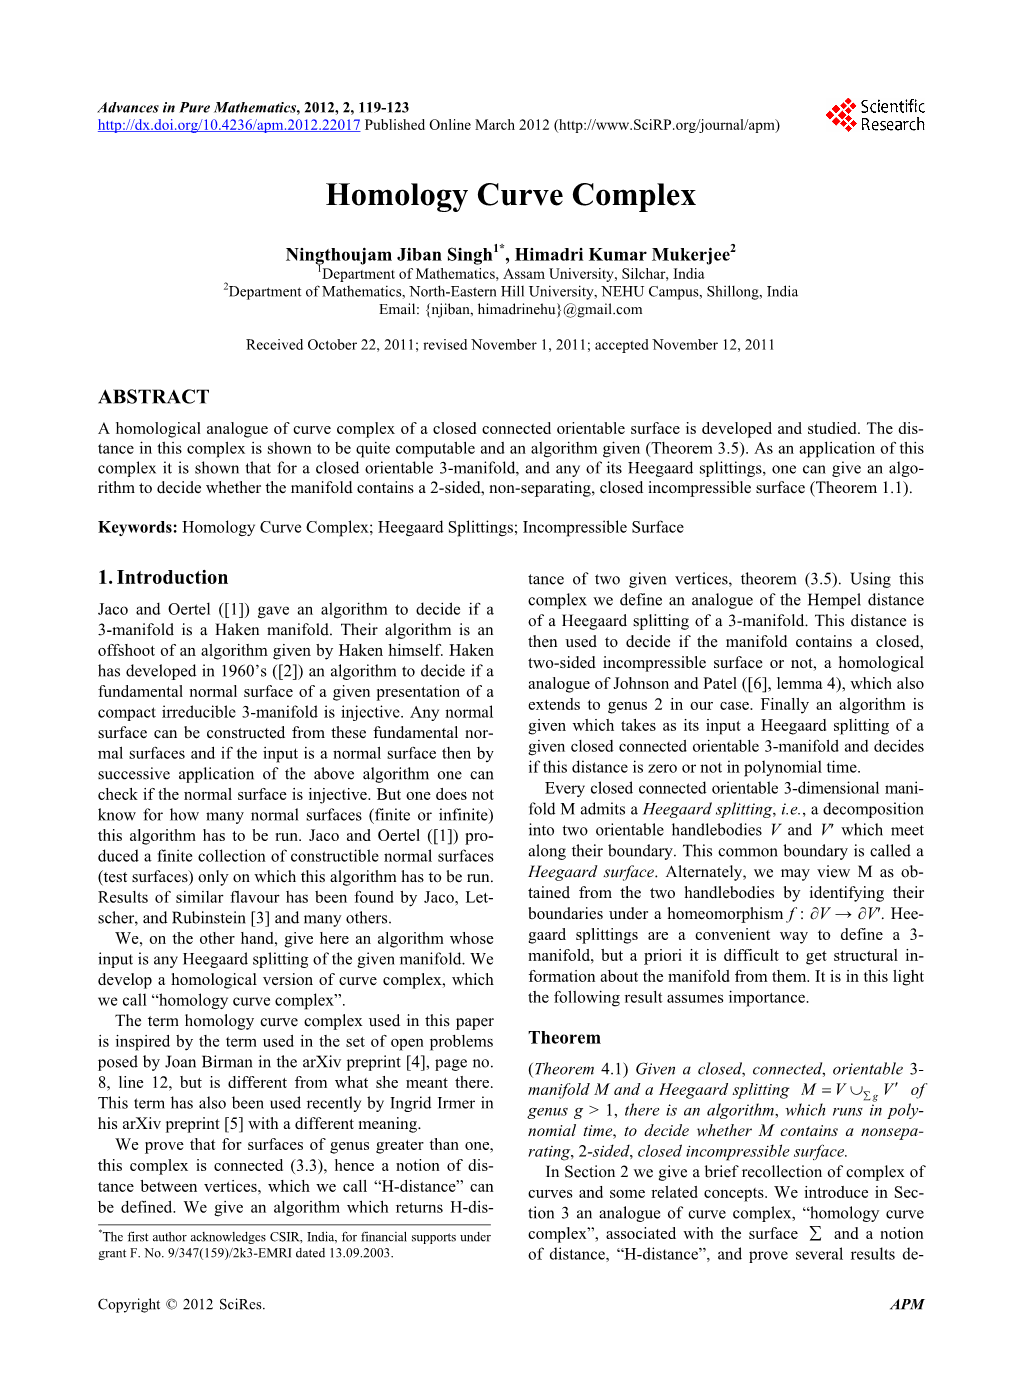 Homology Curve Complex